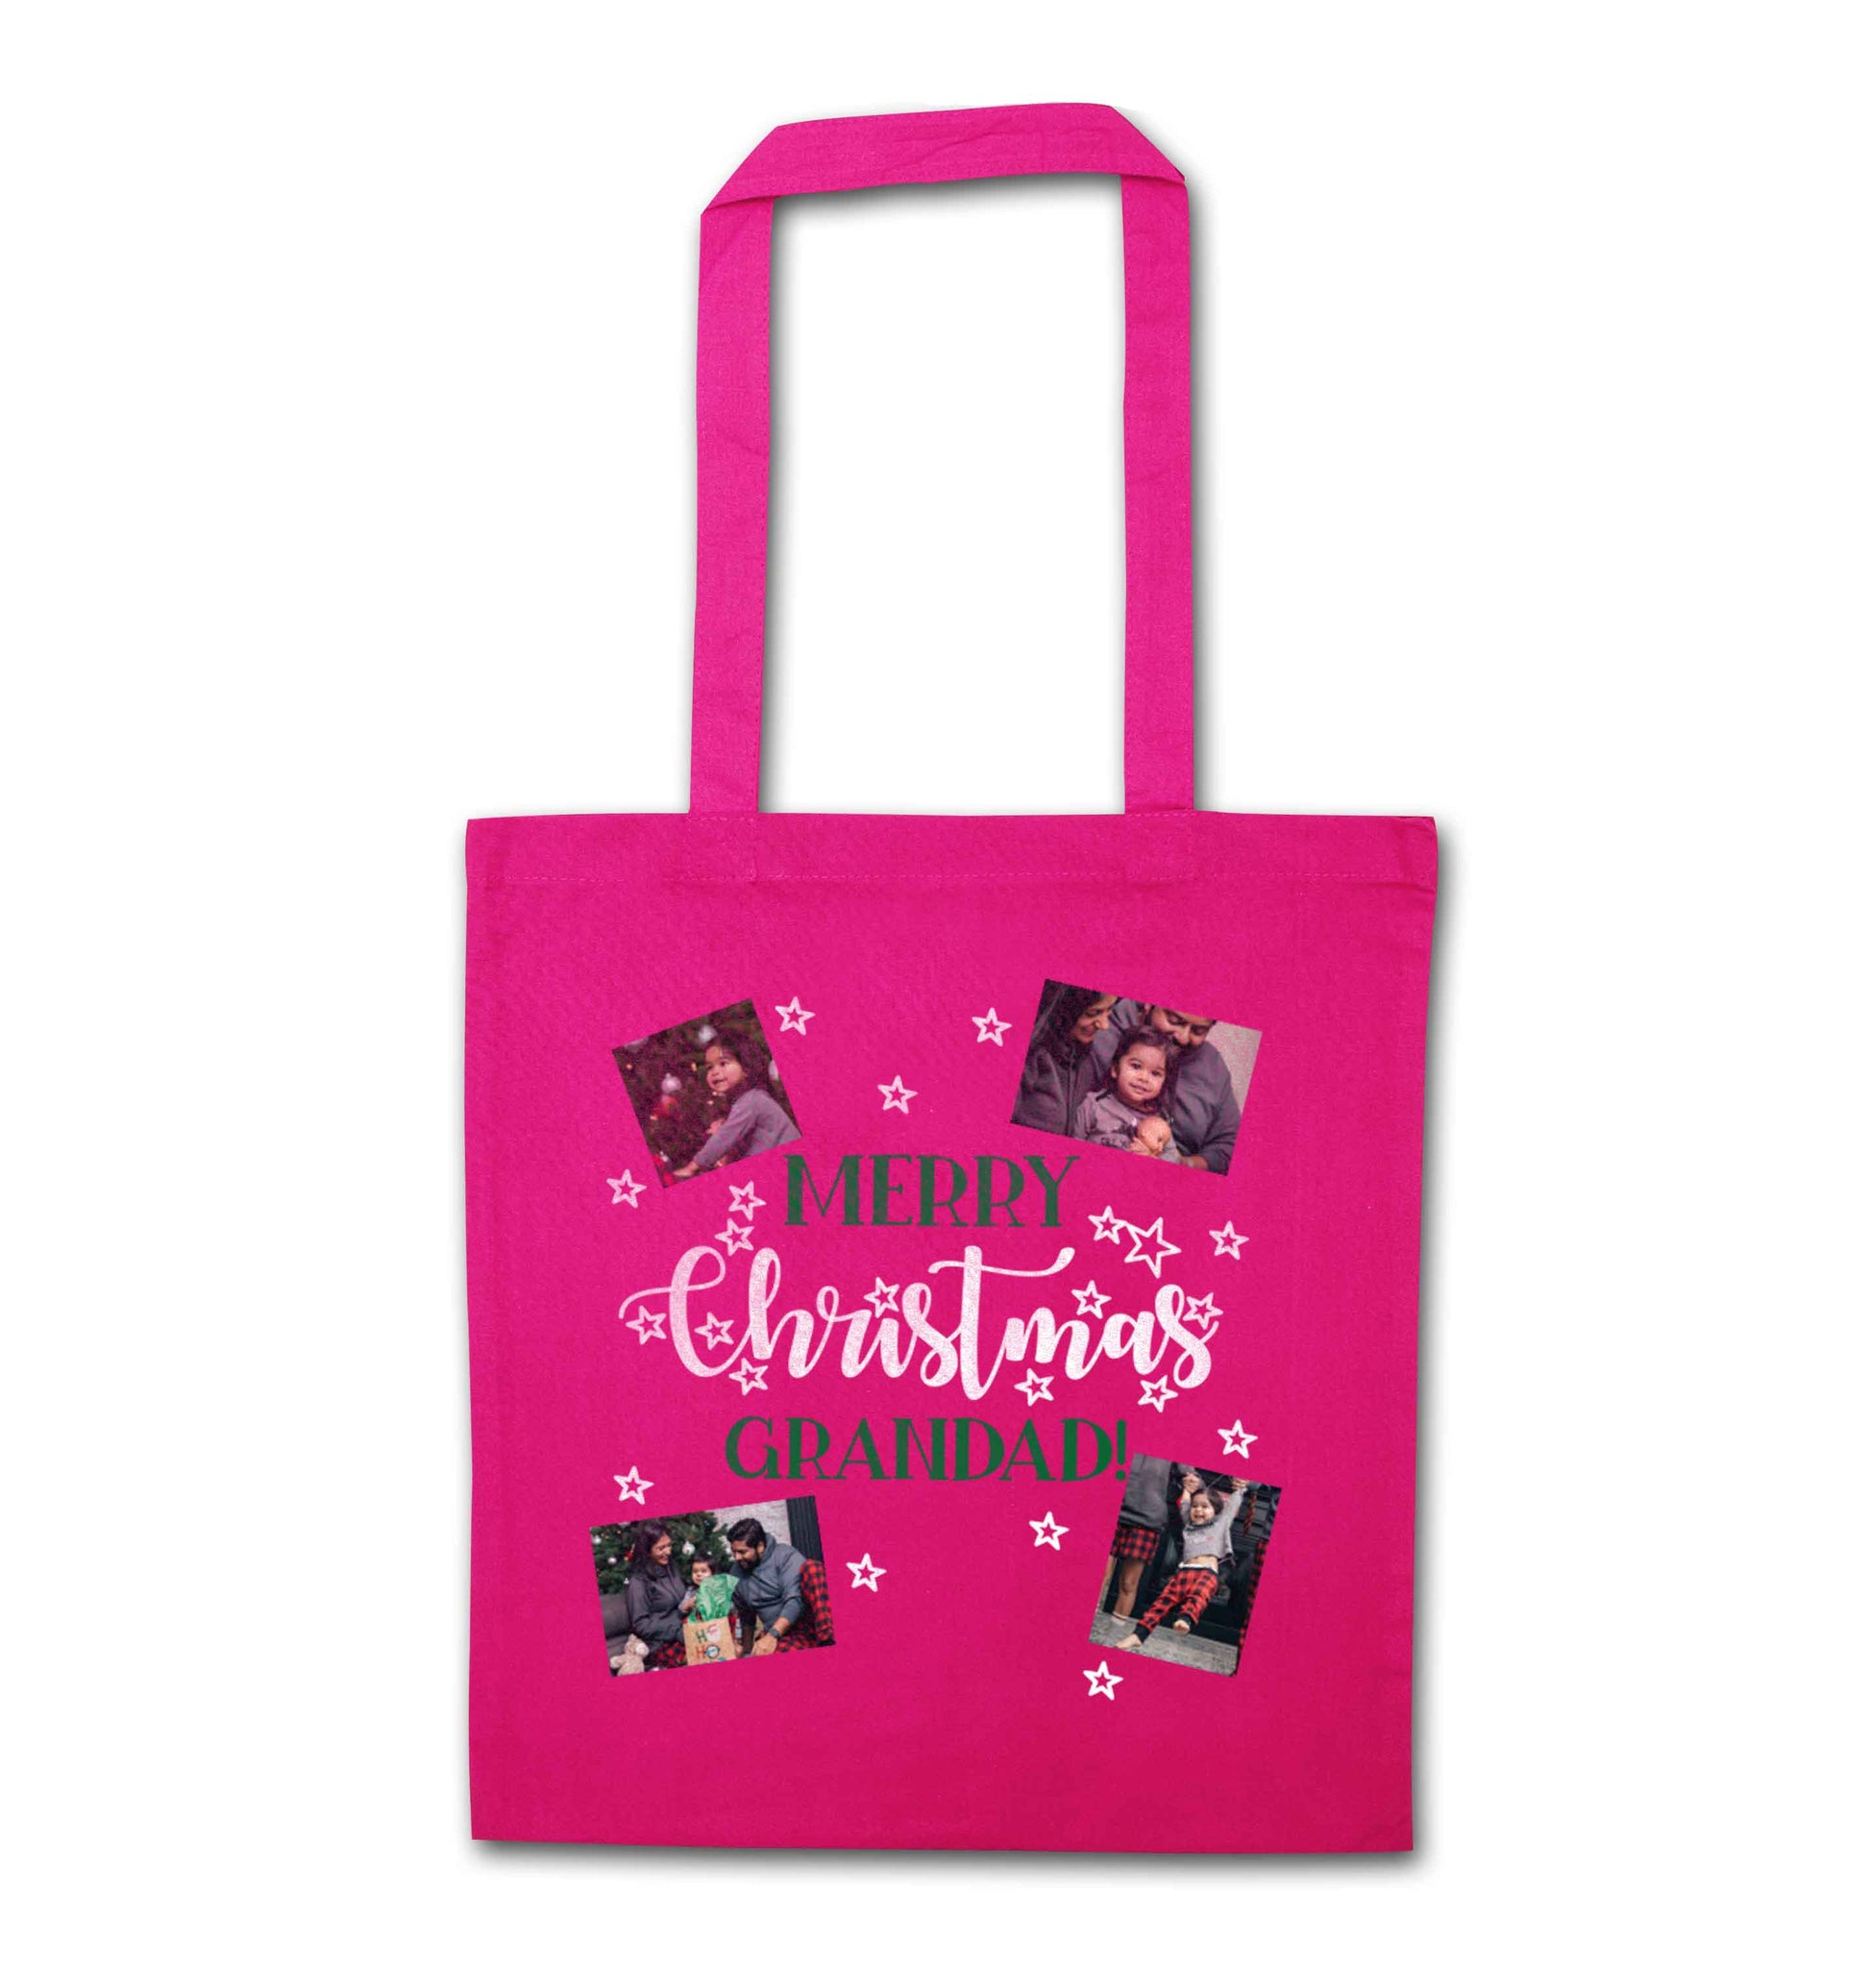 Merry Christmas grandad pink tote bag